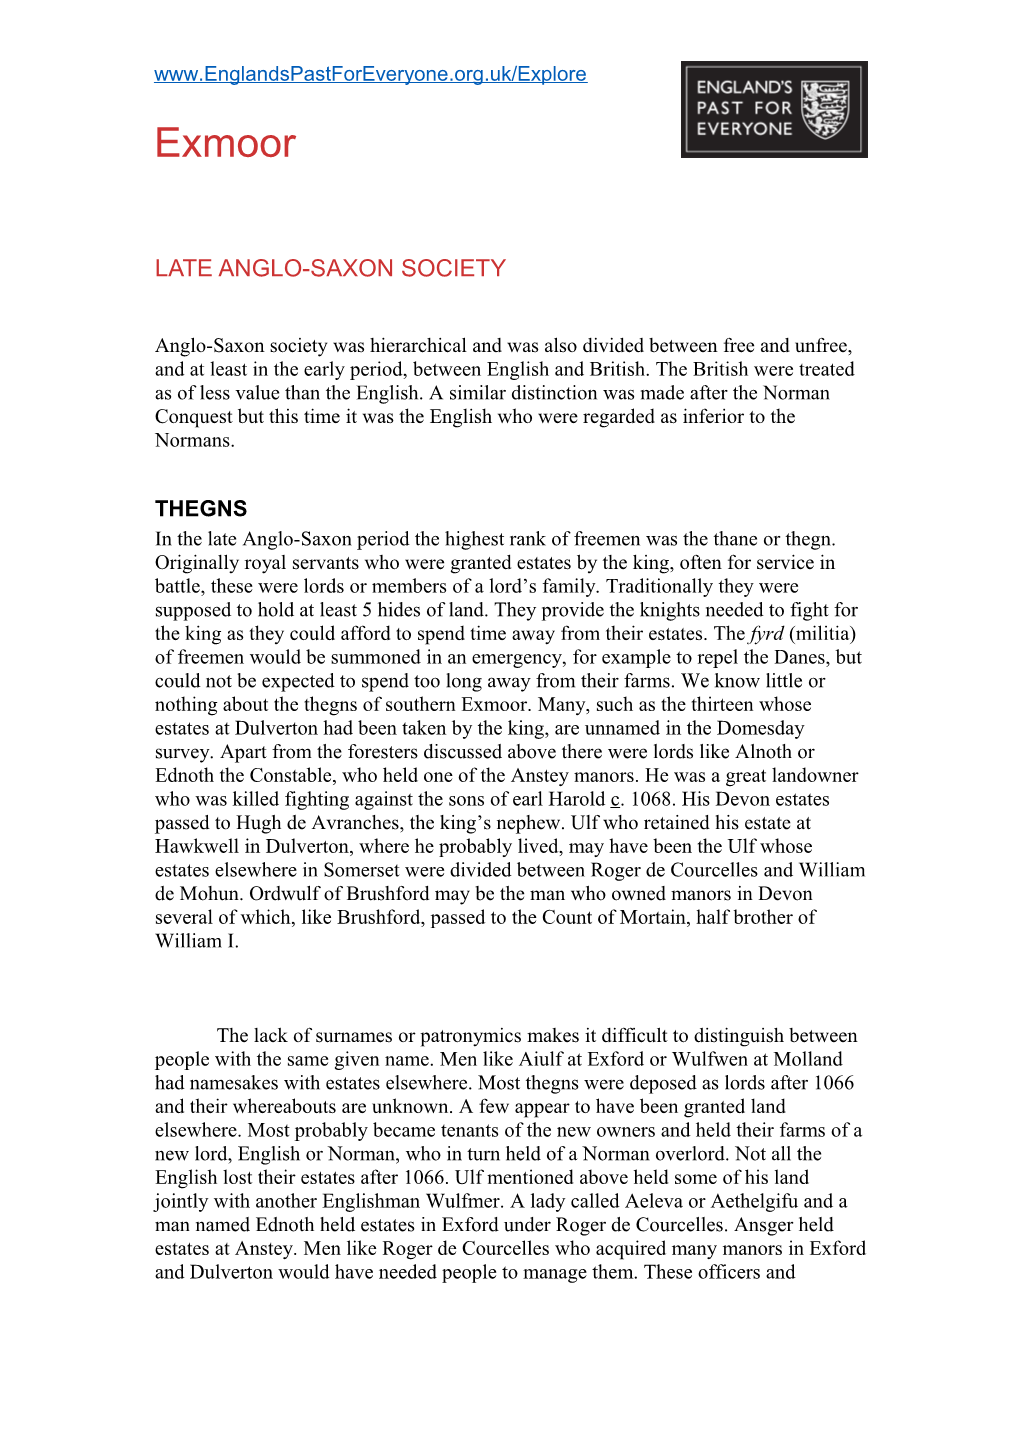 Late Anglo-Saxon Society